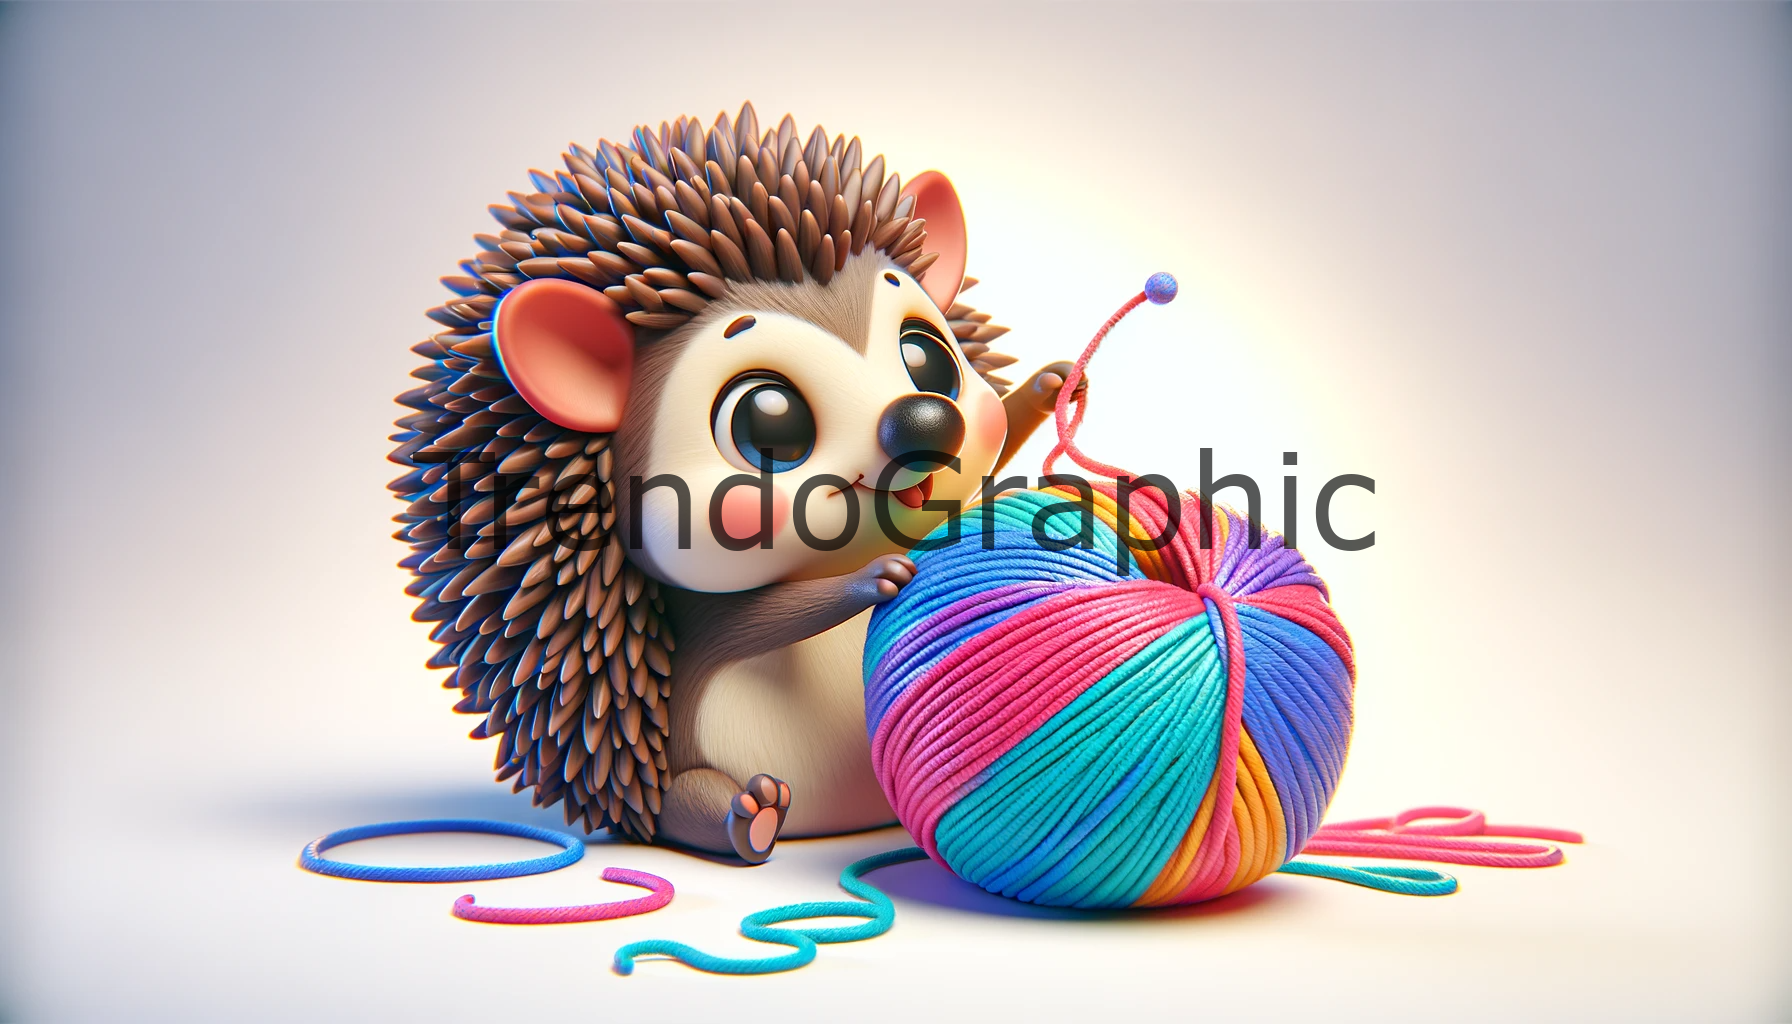 Playful Hedgehog and Colorful Yarn – A Charming Scene